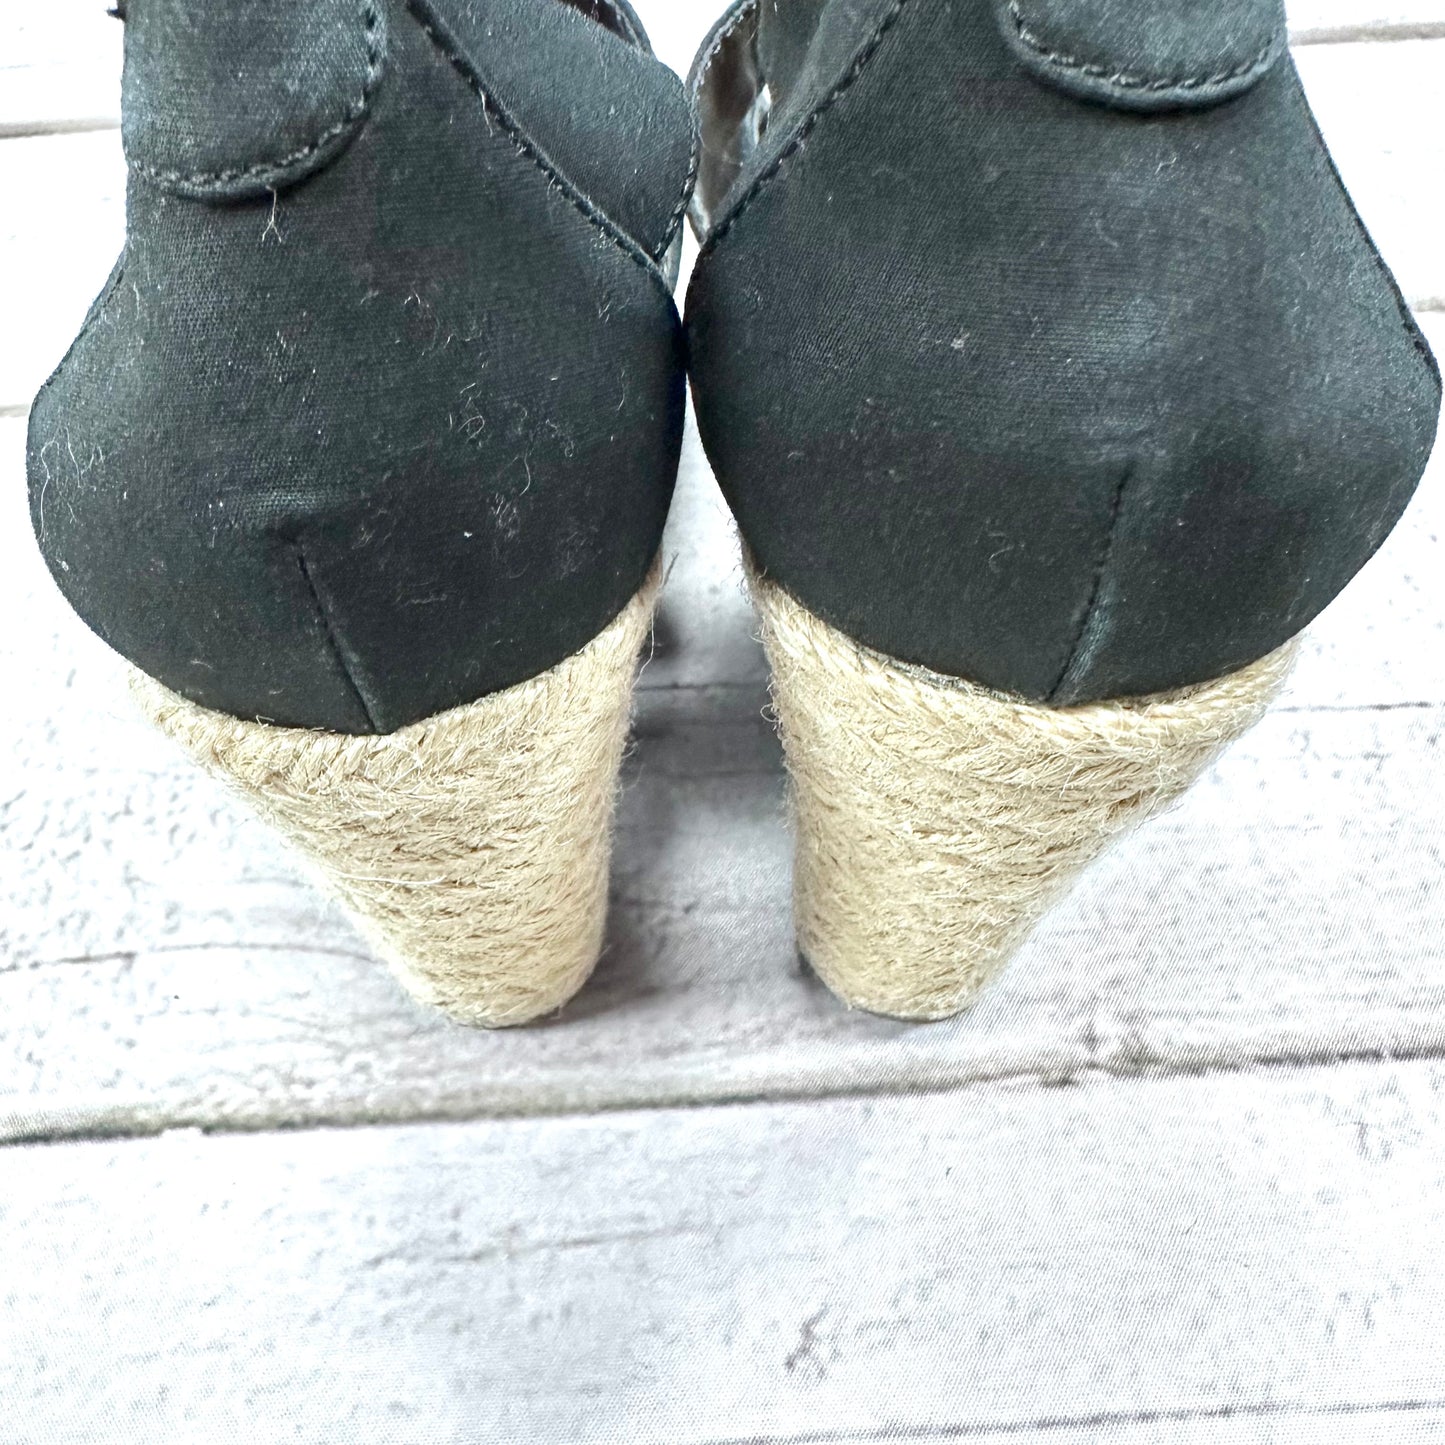 Sandals Heels Wedge By Moda spana Size: 9